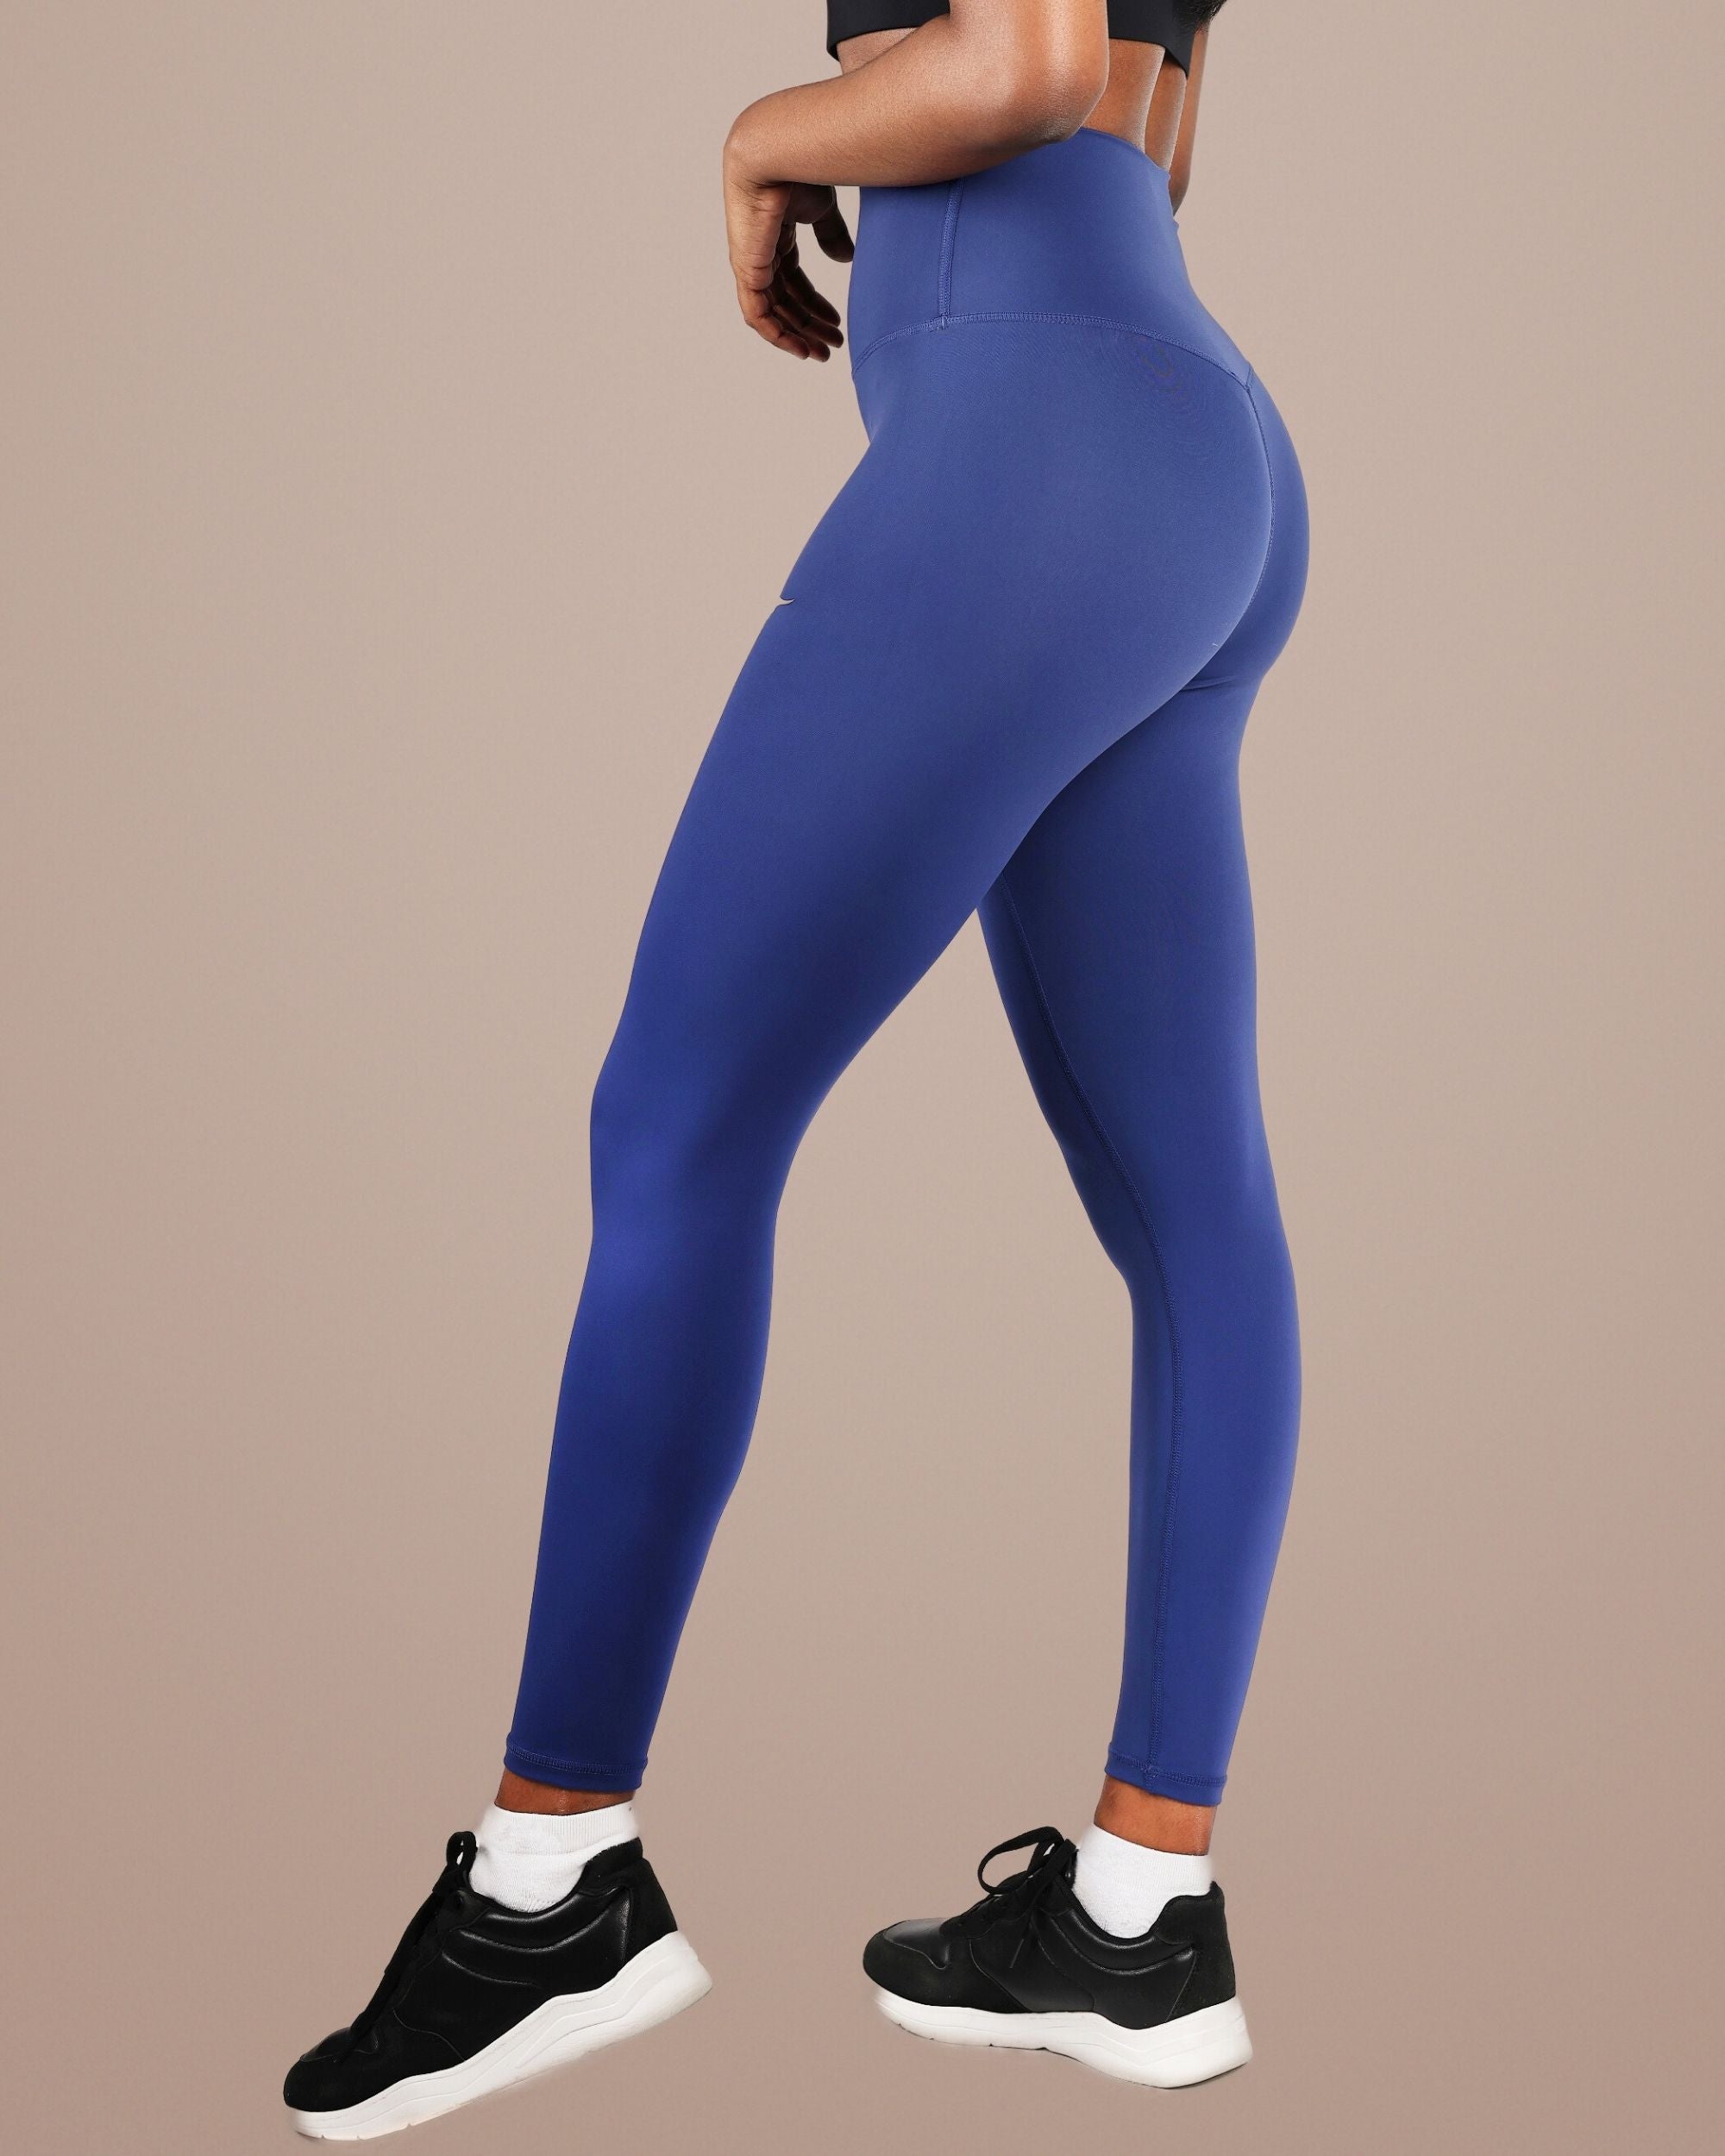 THUGFIT FlexFit Pro High-performance leggings - Blue